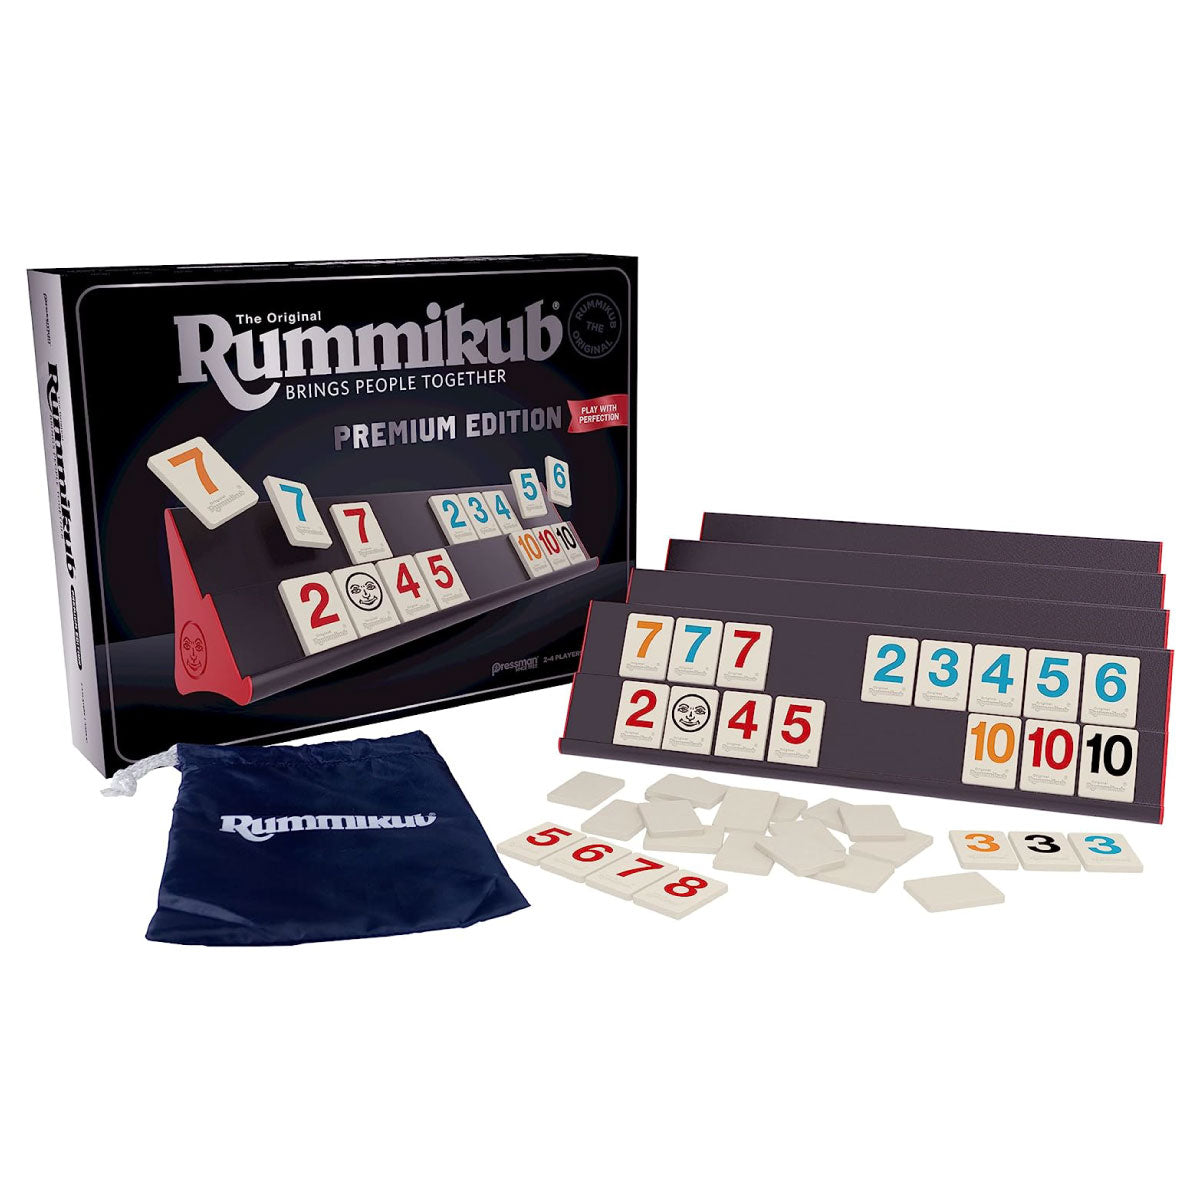 Rummikub Premium Edition from Pressman / Goliath Games